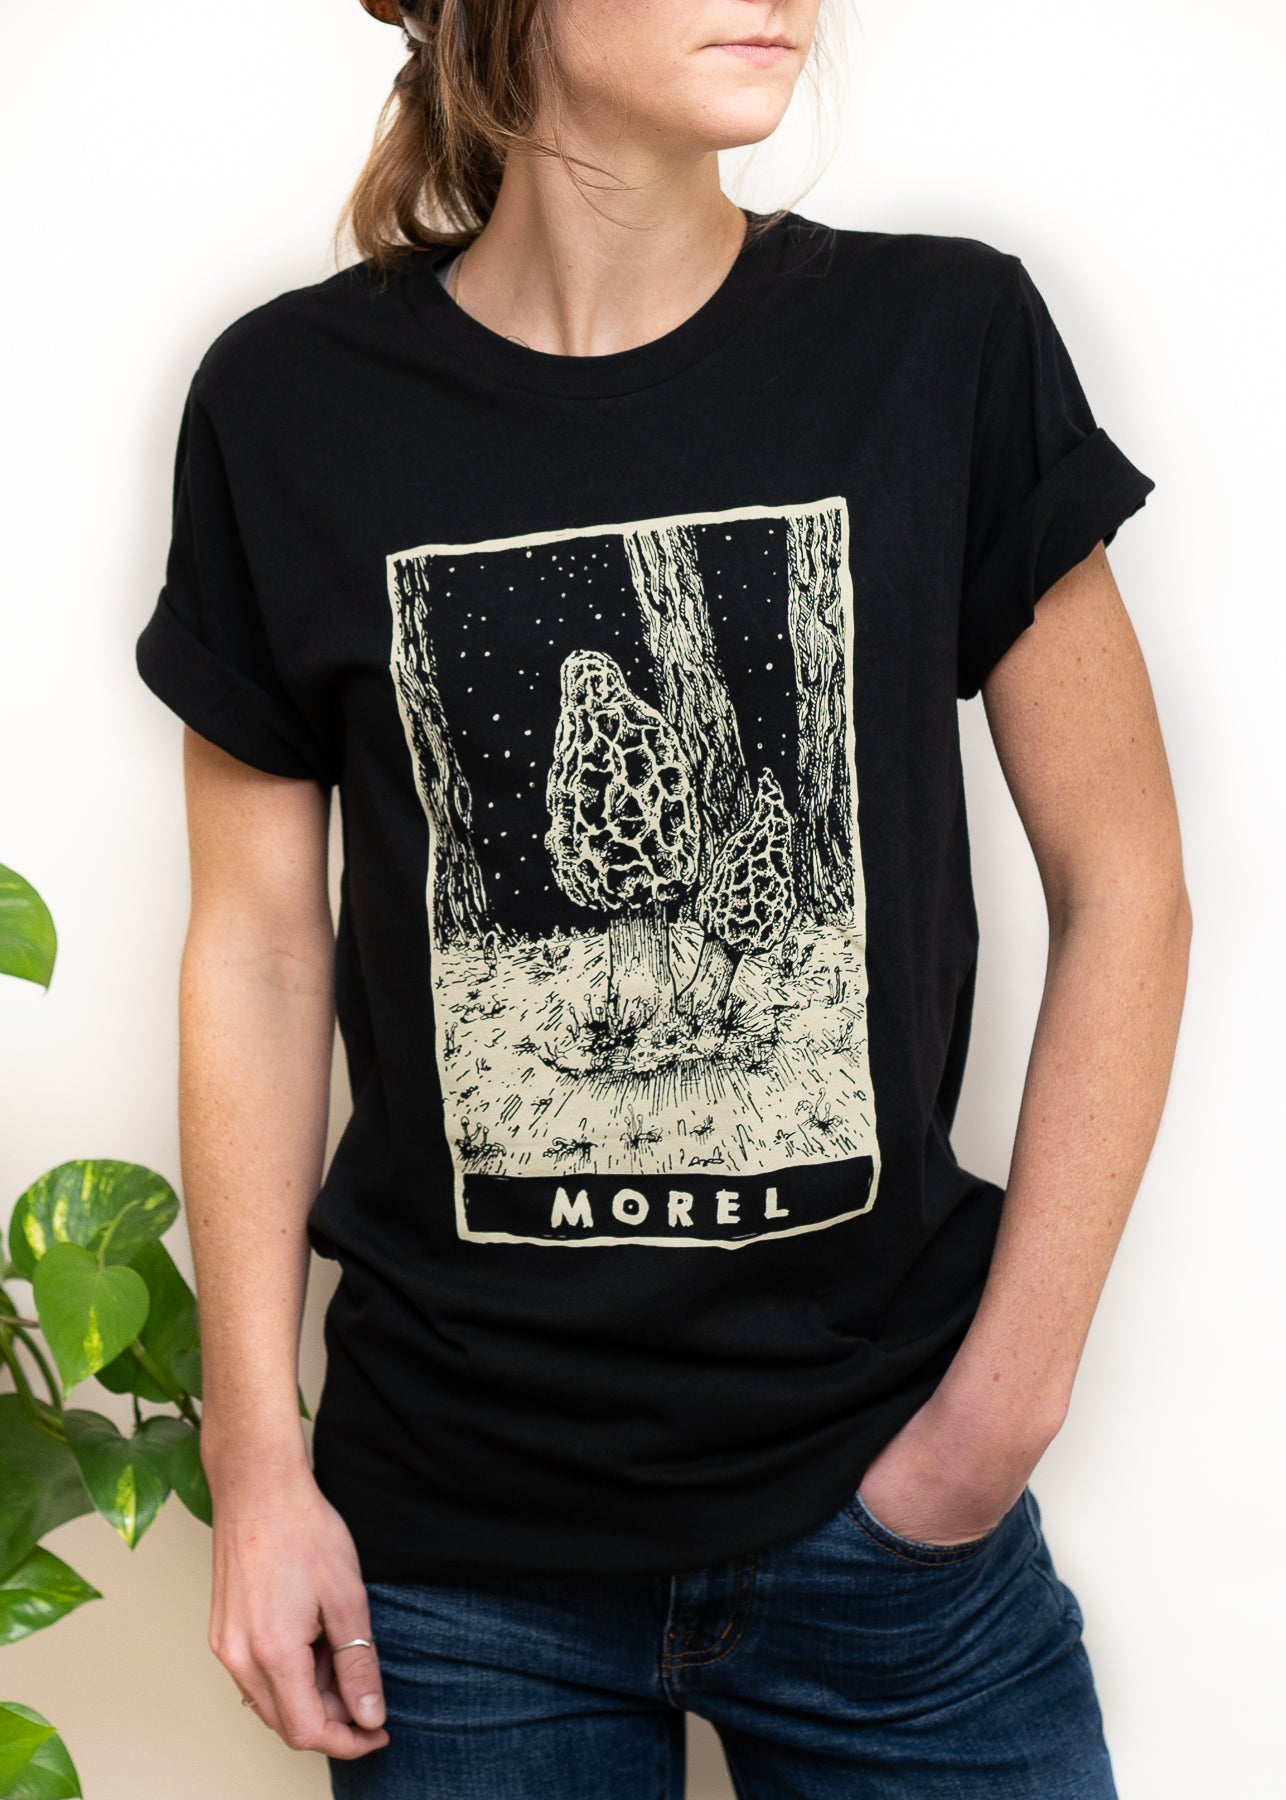 Morel Mushroom Shirt, Black Organic Cotton